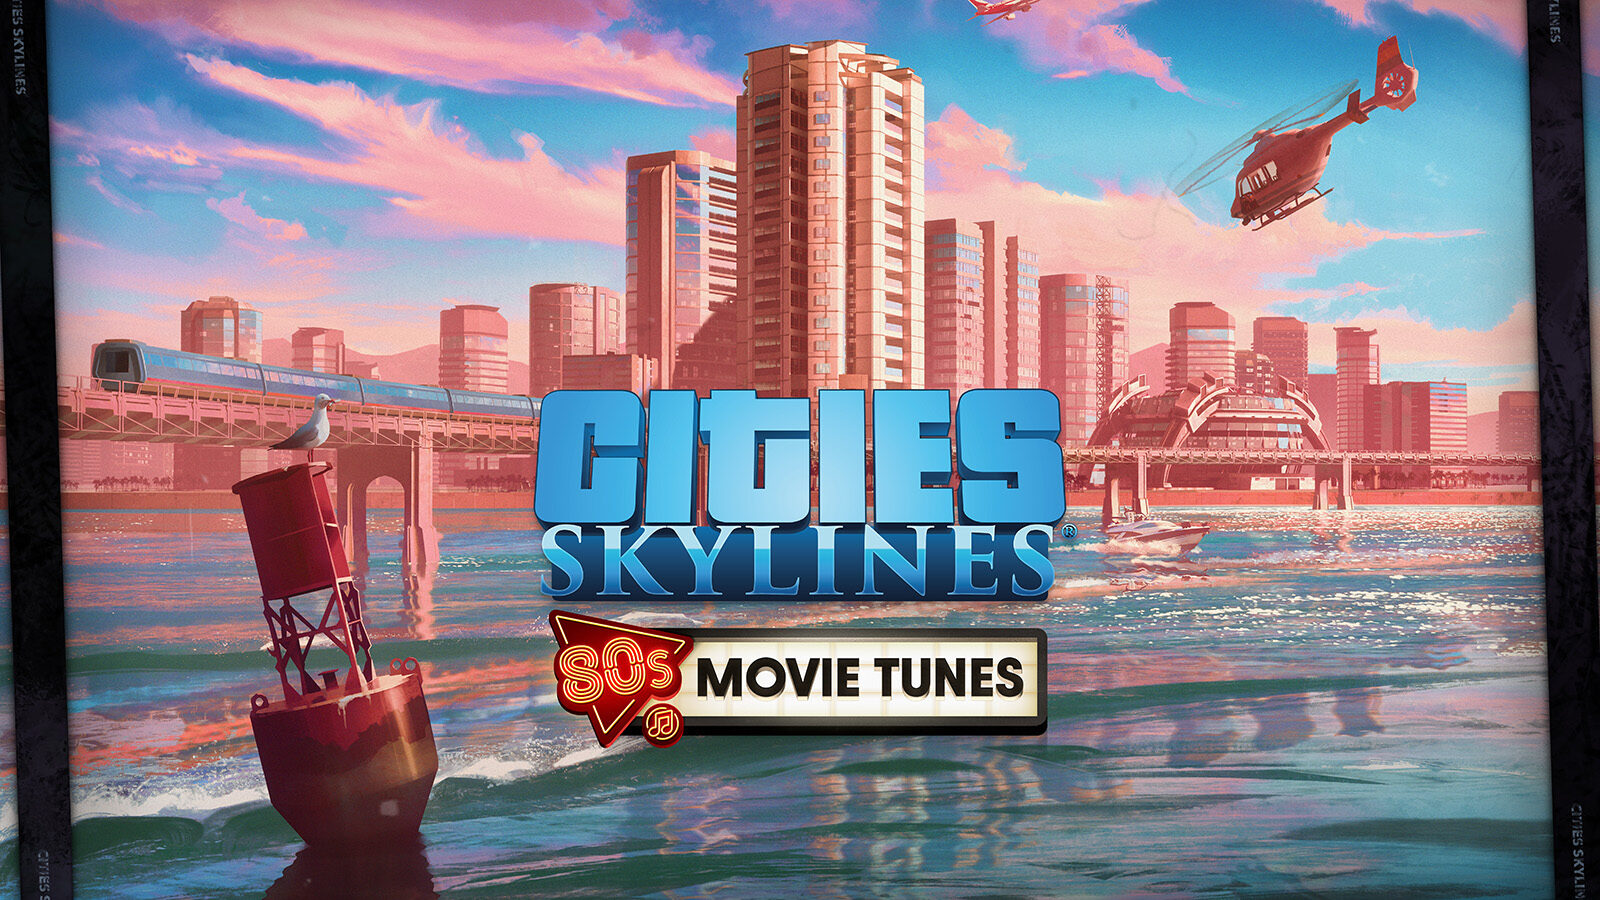 Cities: Skylines 80s Movies Tunes